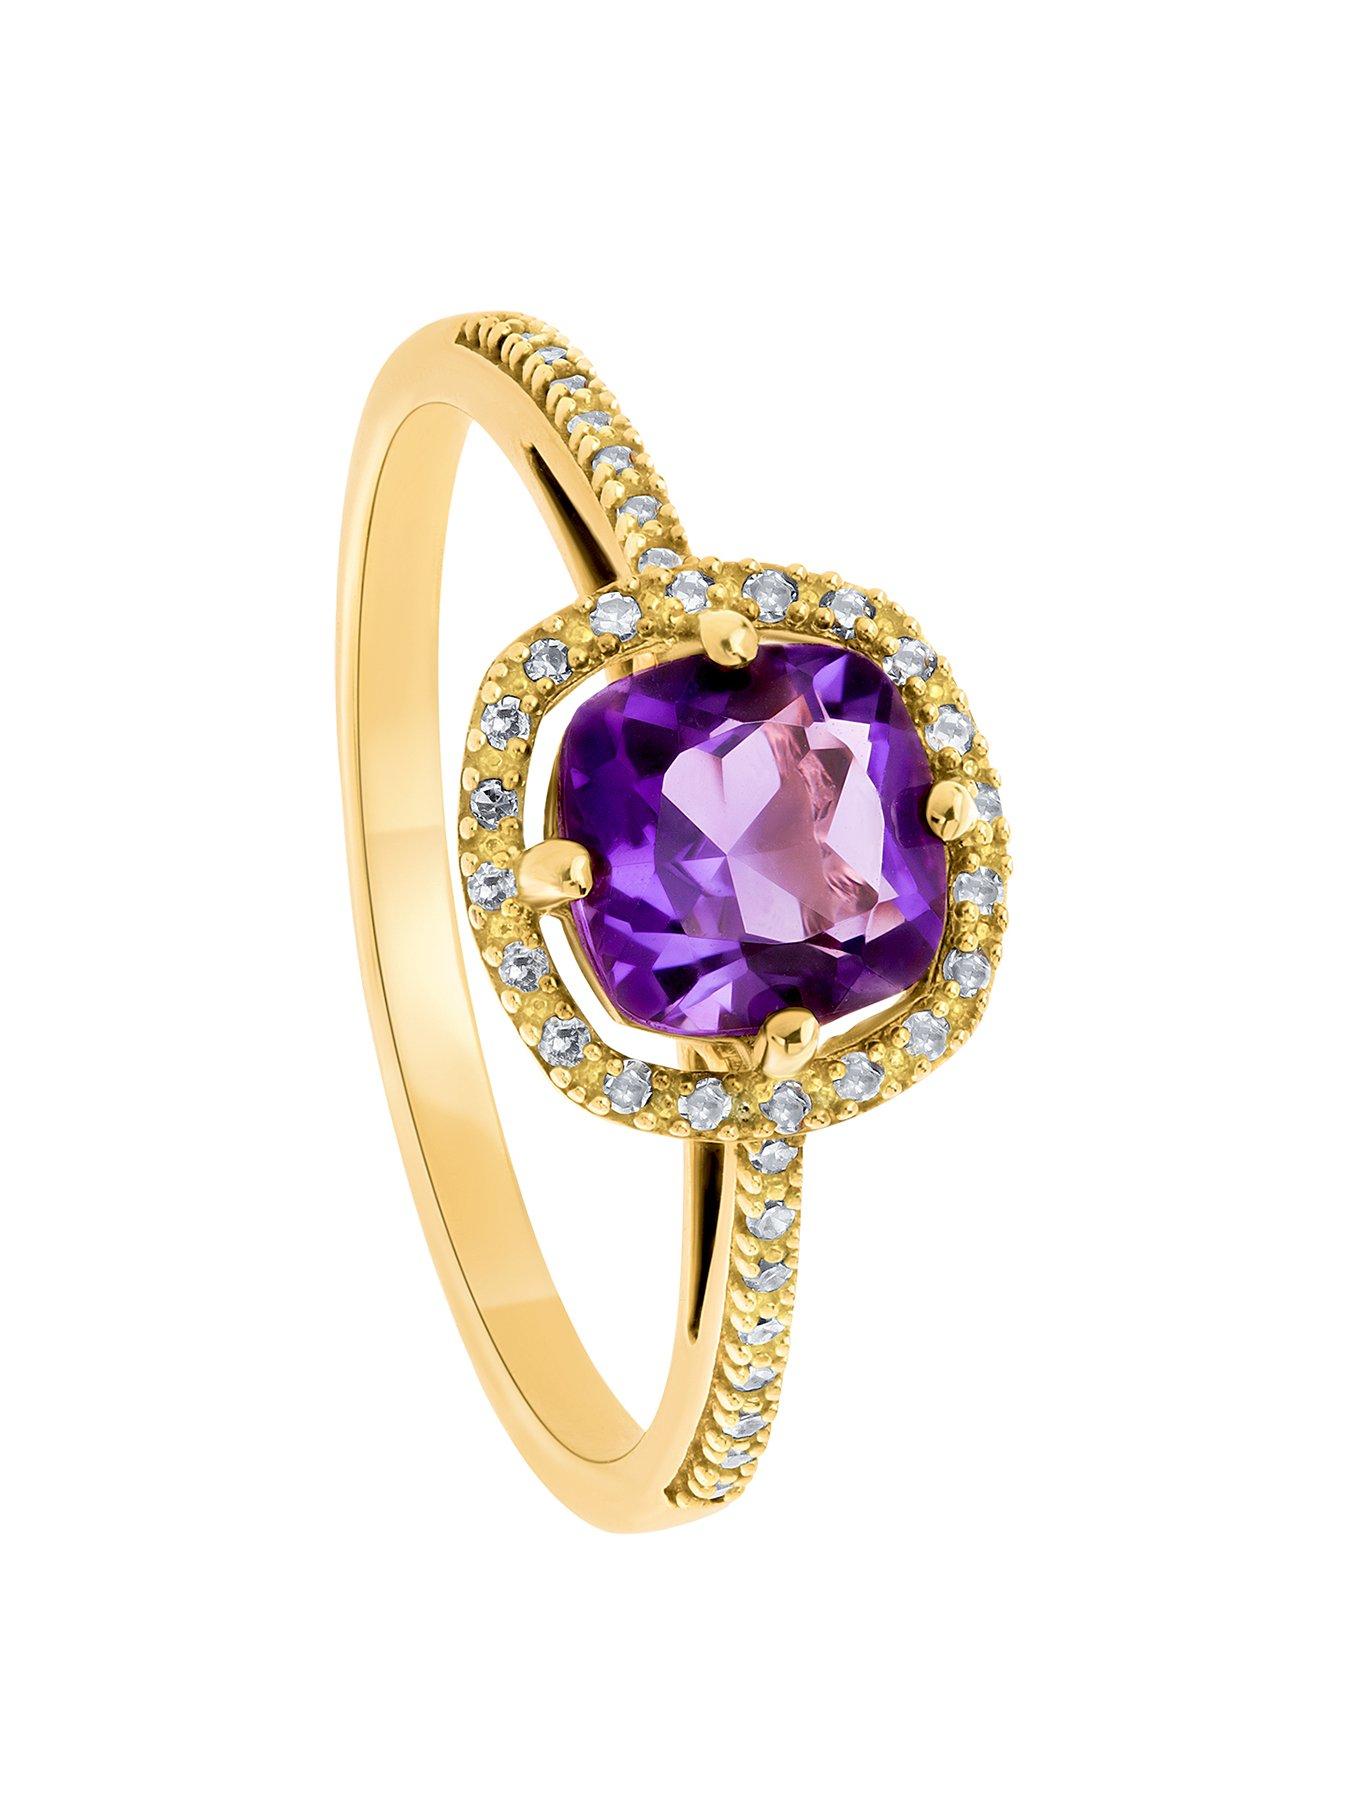 Shop Amethyst Gemstone Rings Online For Women – Tagged 